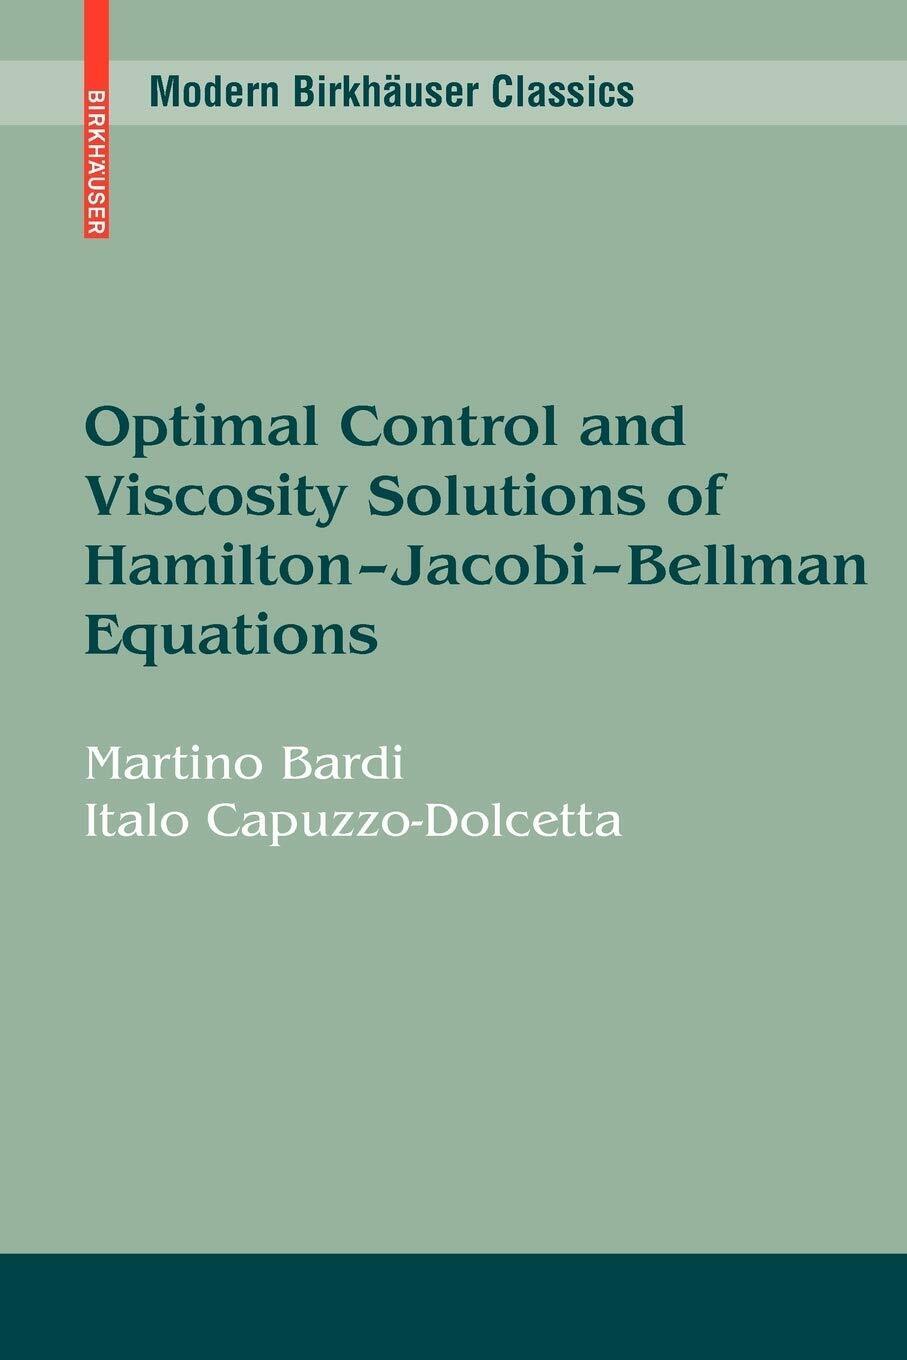 Optimal Control and Viscosity Solutions of Hamilton-Jacobi-Bellman Equations libro usato